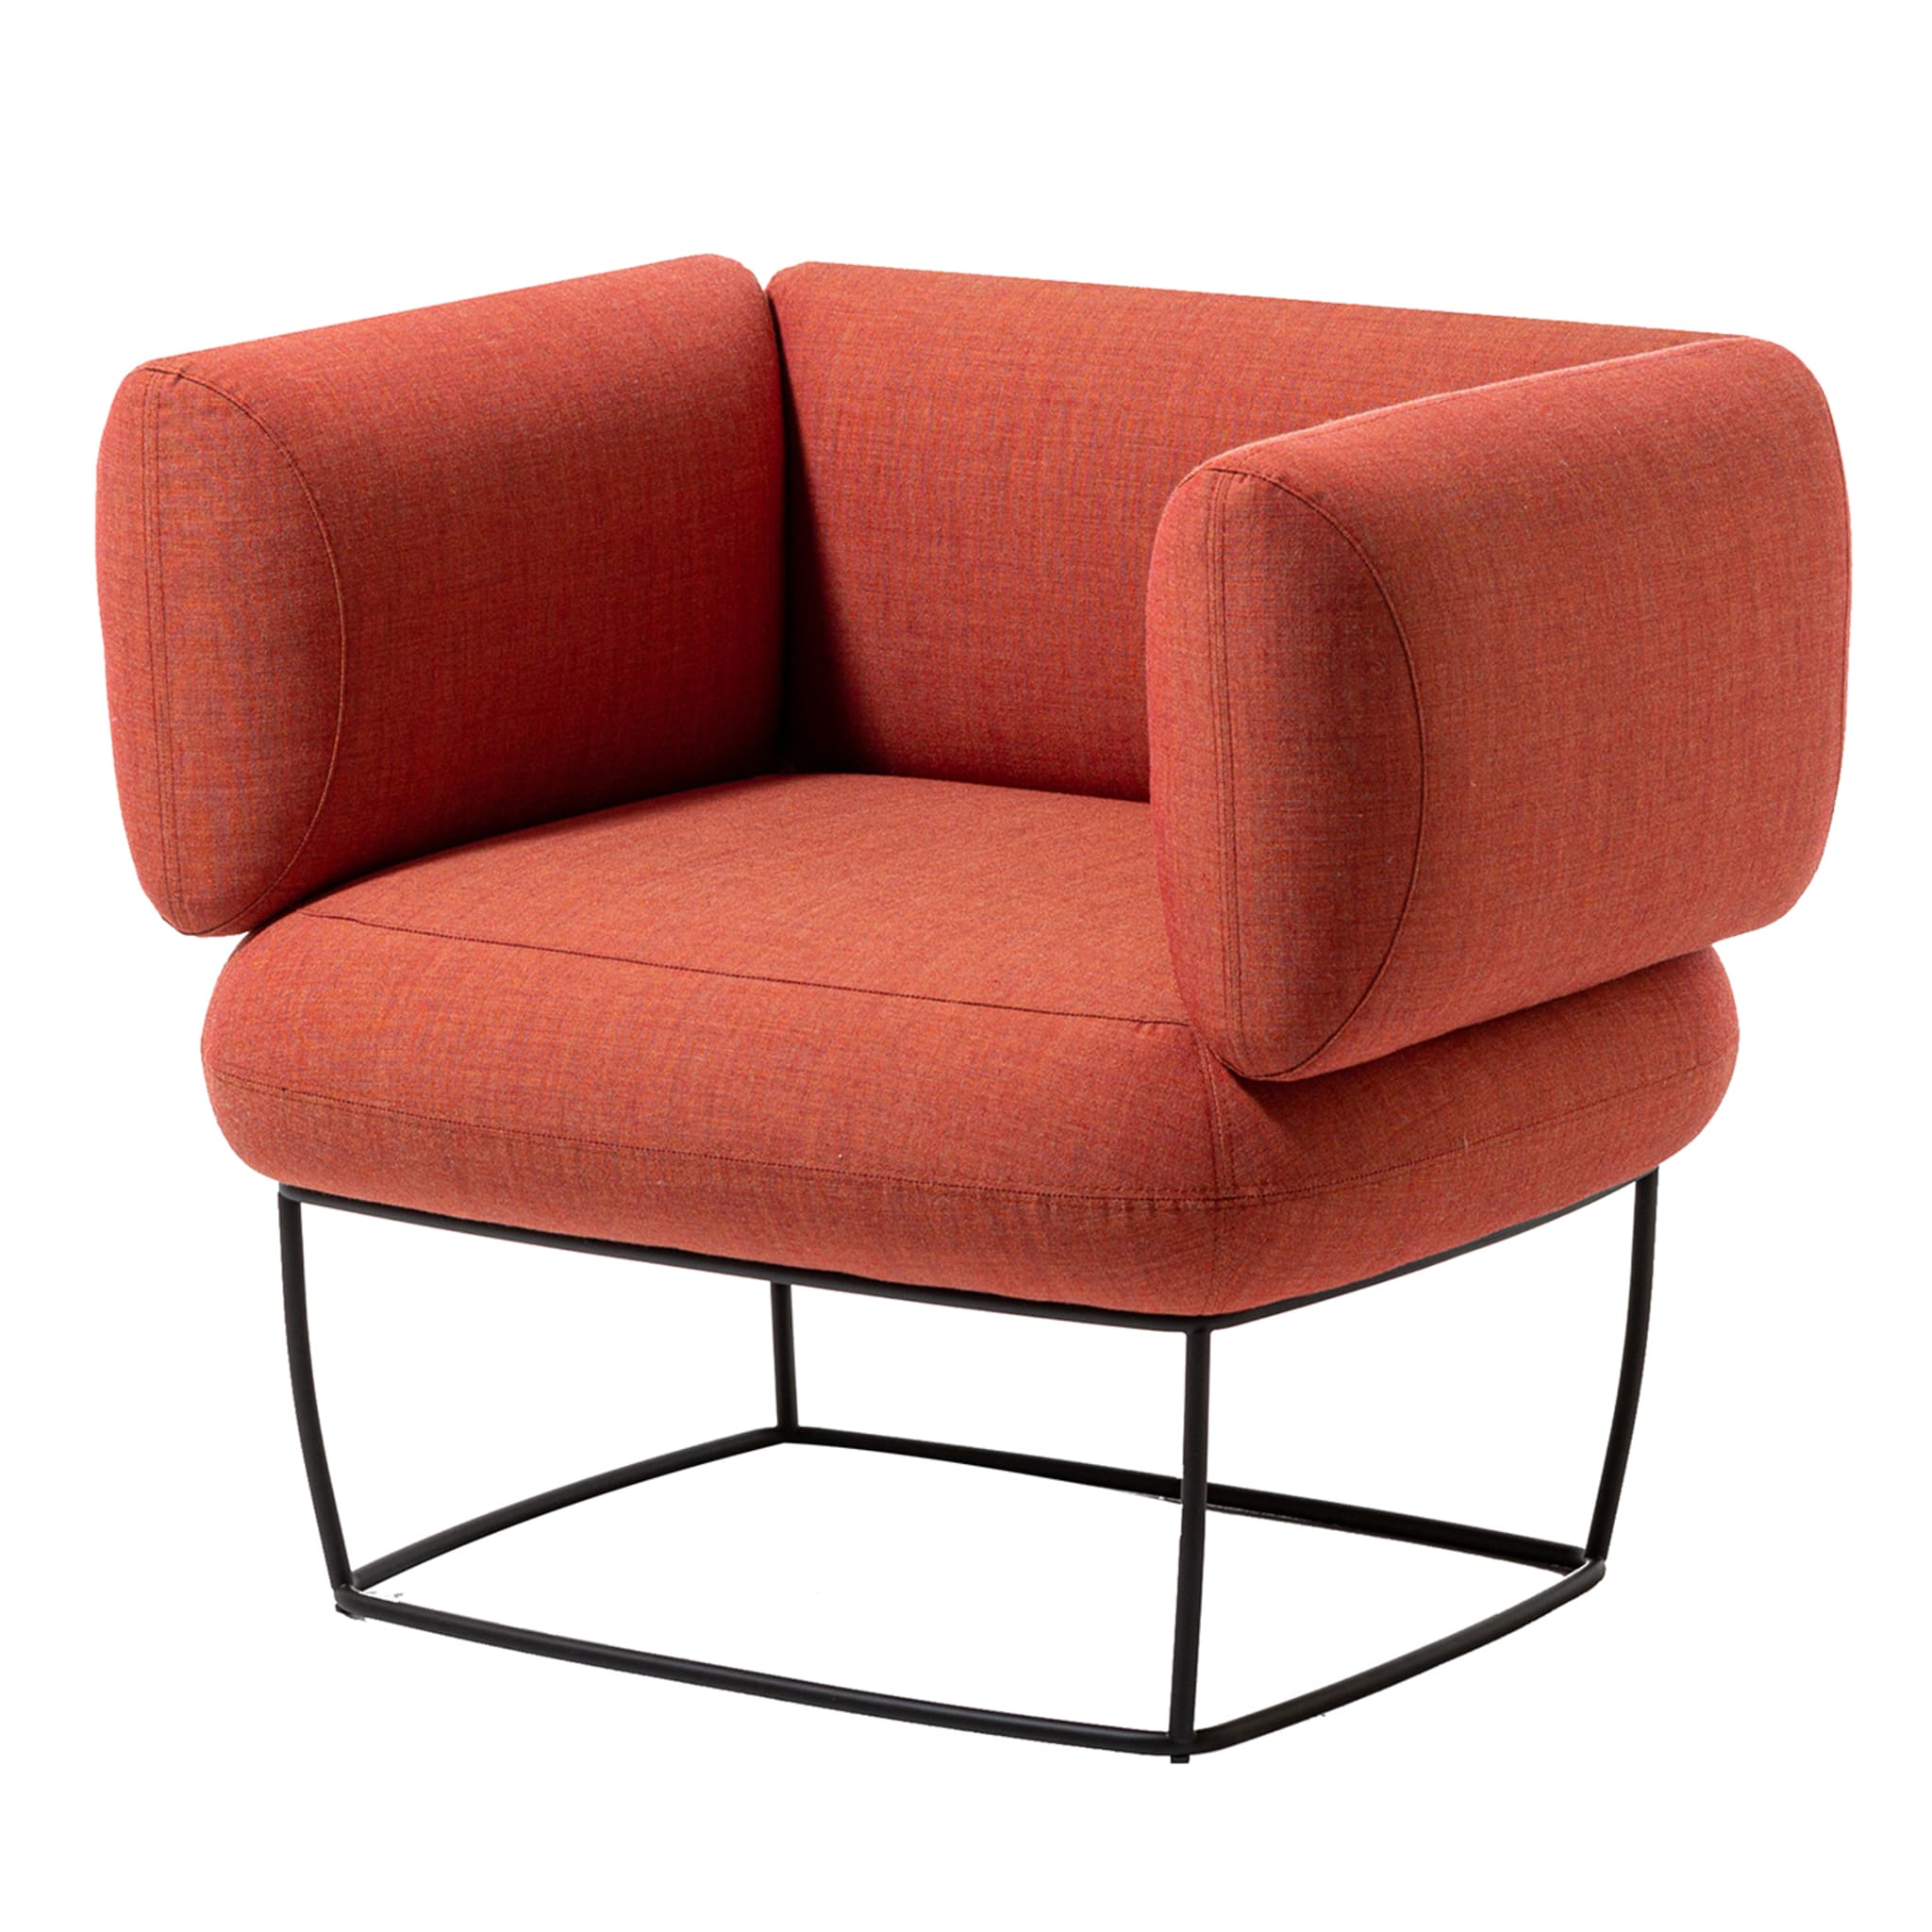 Bernard Orange Small Armchair - Main view